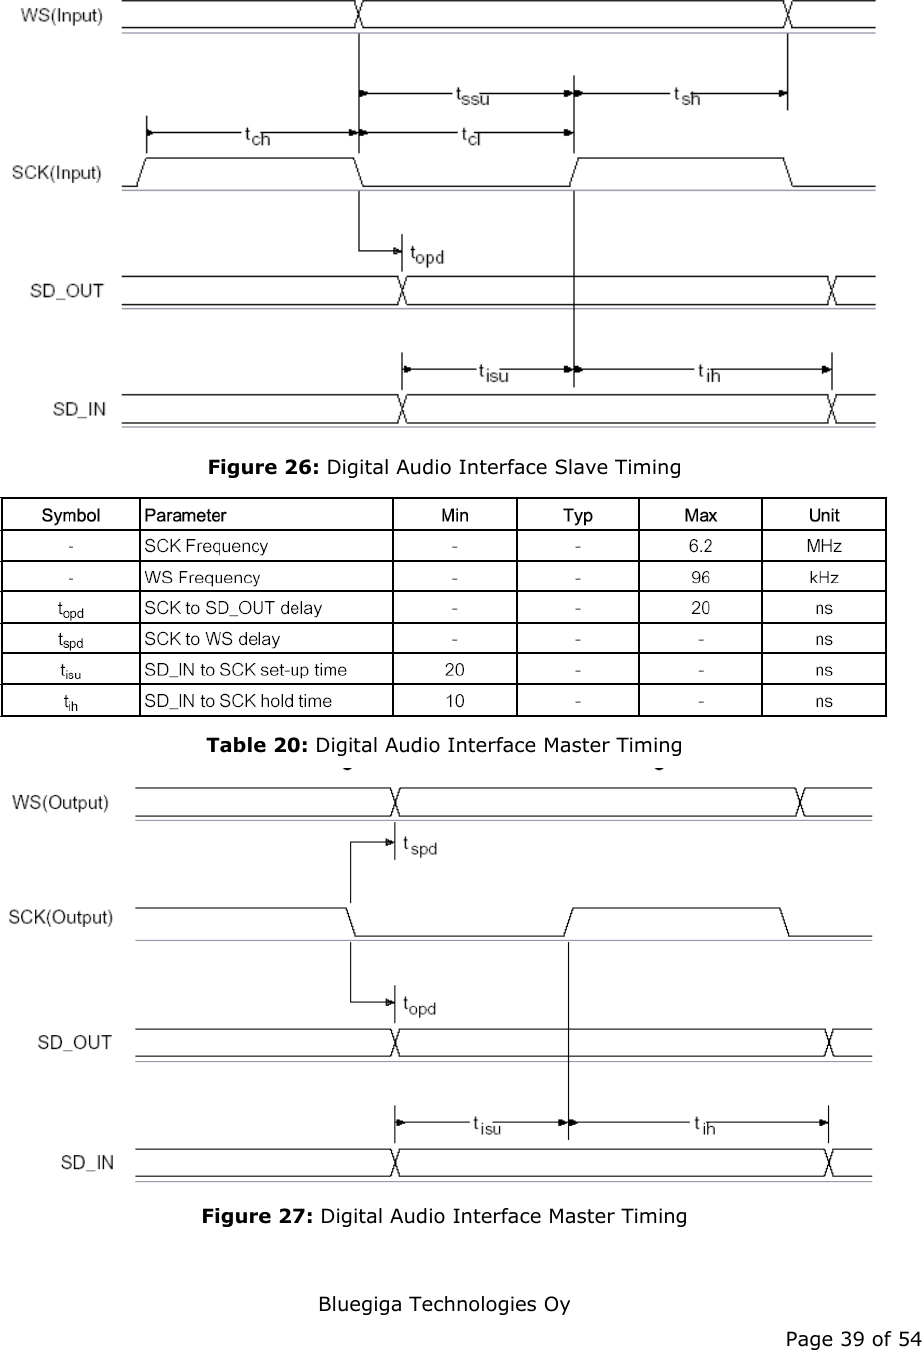   Bluegiga Technologies Oy Page 39 of 54  Figure 26: Digital Audio Interface Slave Timing  Table 20: Digital Audio Interface Master Timing  Figure 27: Digital Audio Interface Master Timing 